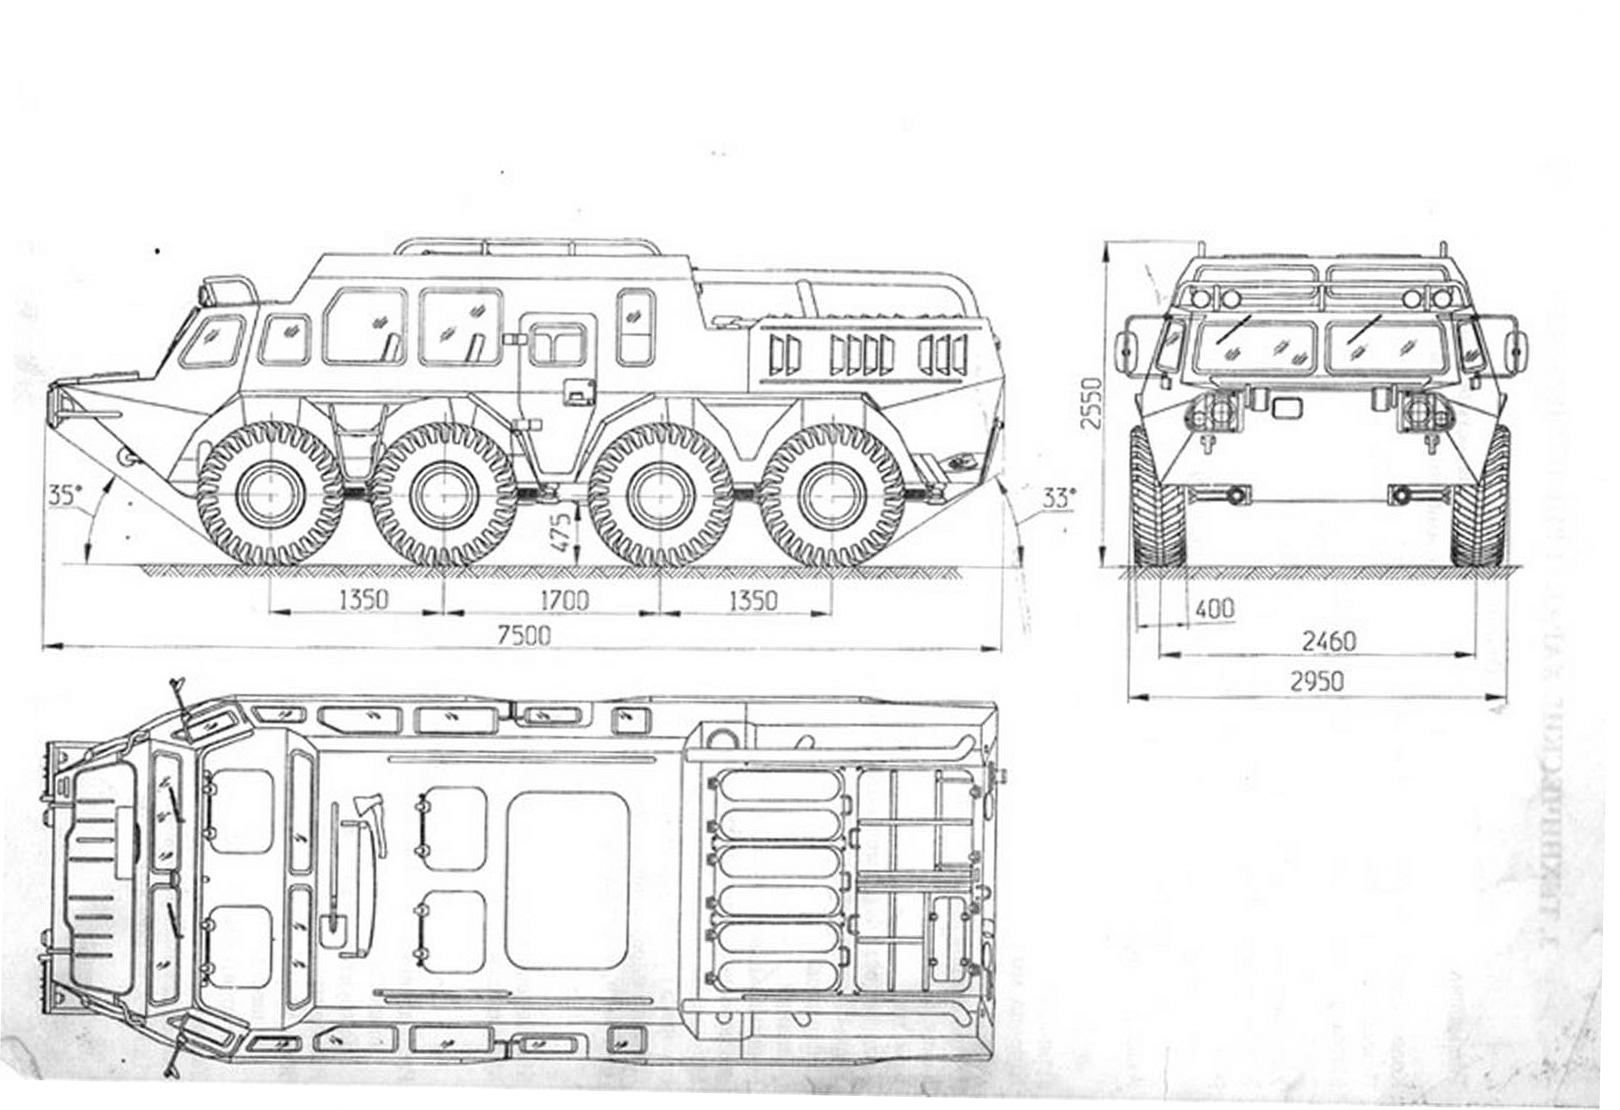 BTR-80 blueprint